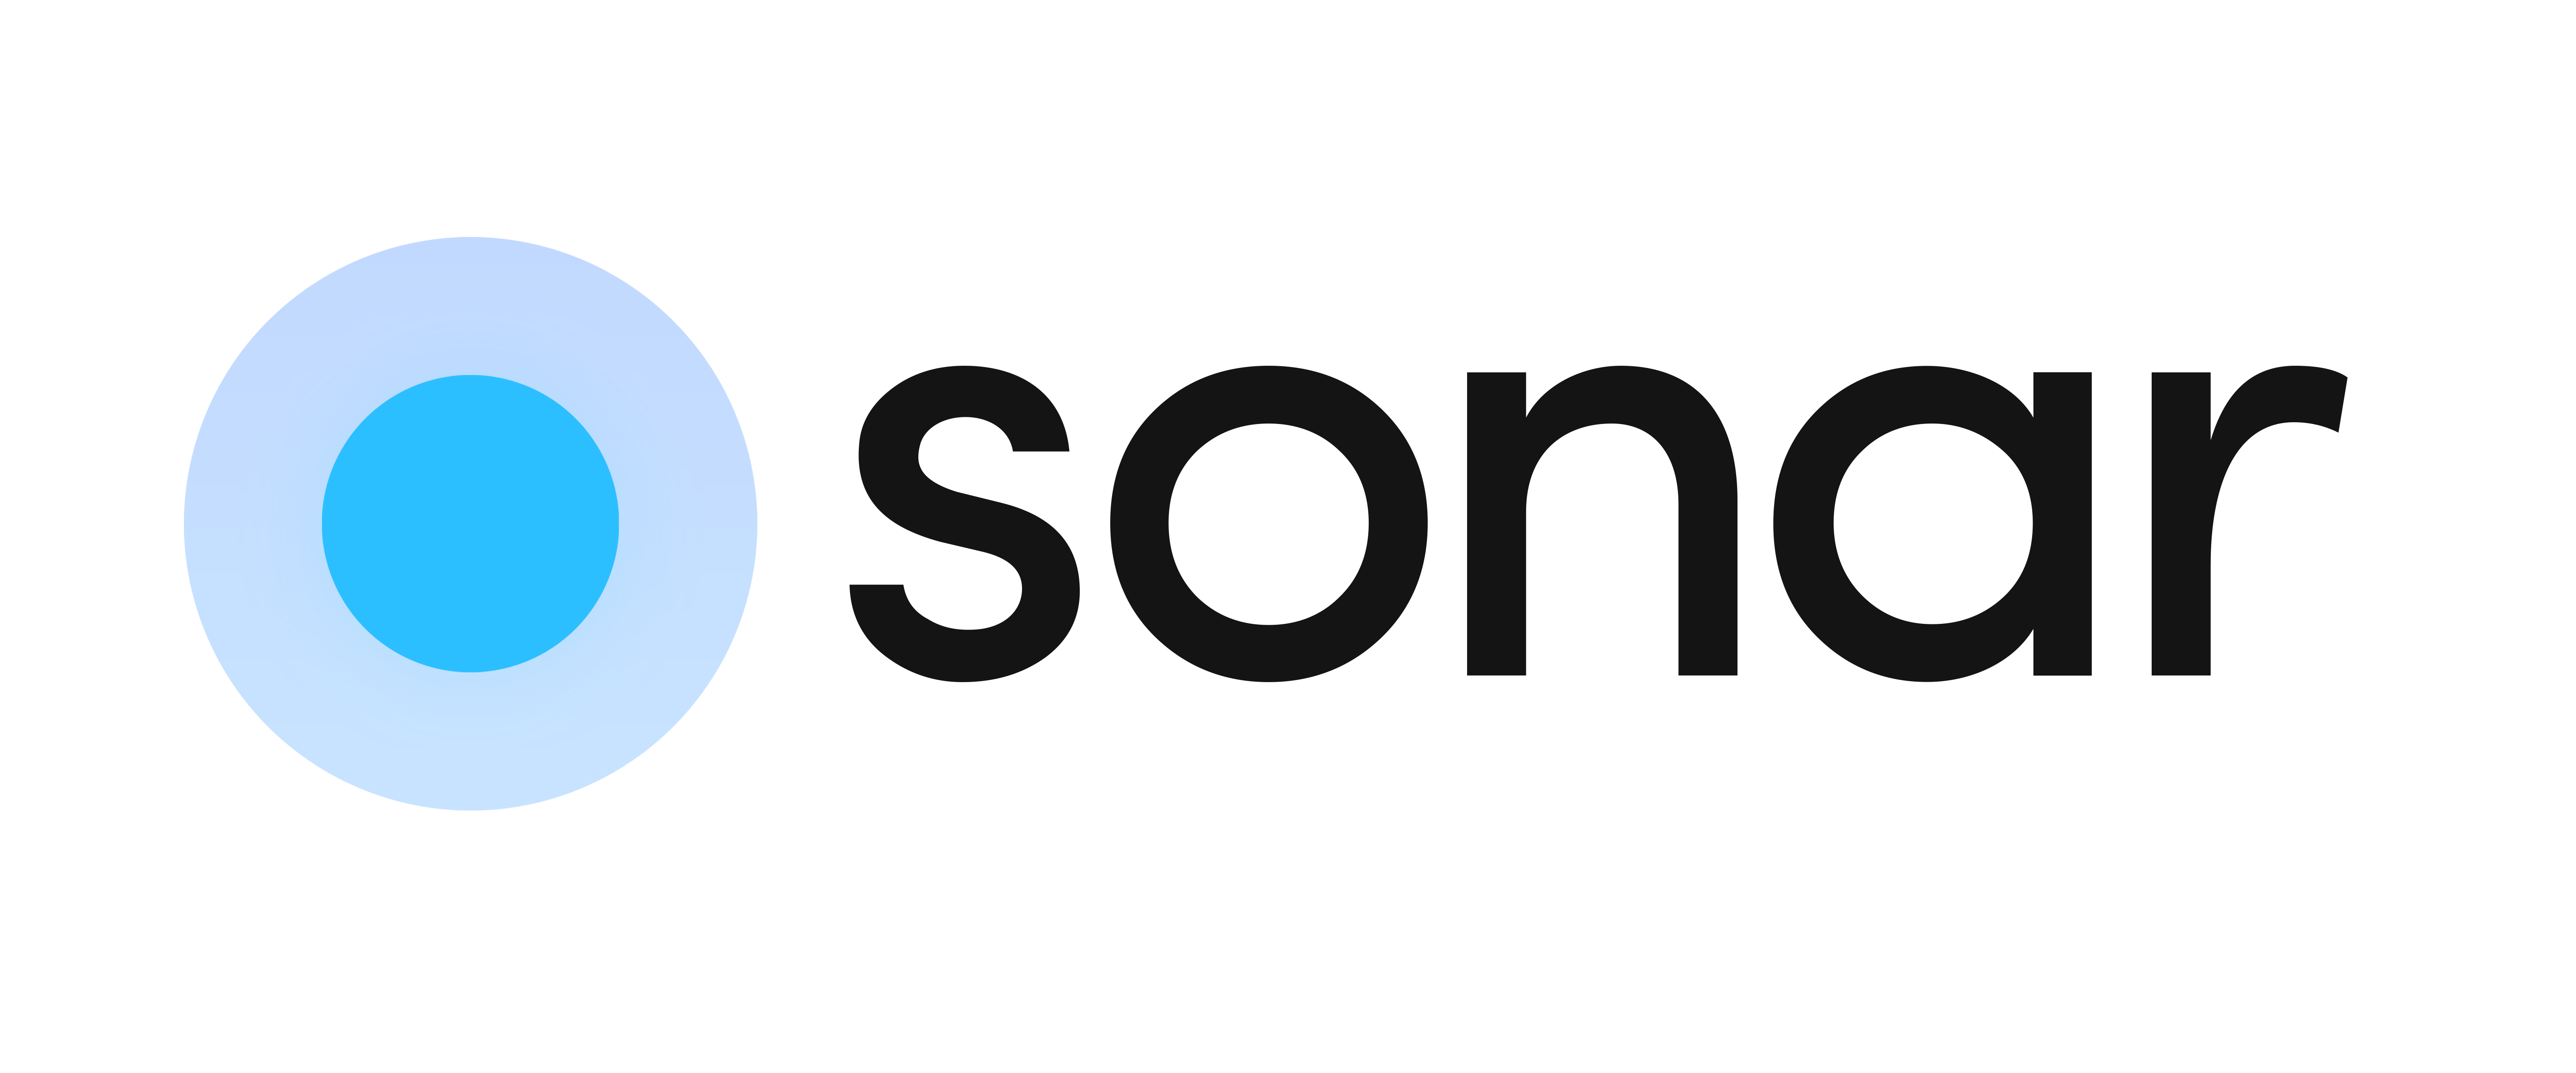 New Sonar Logo - Black